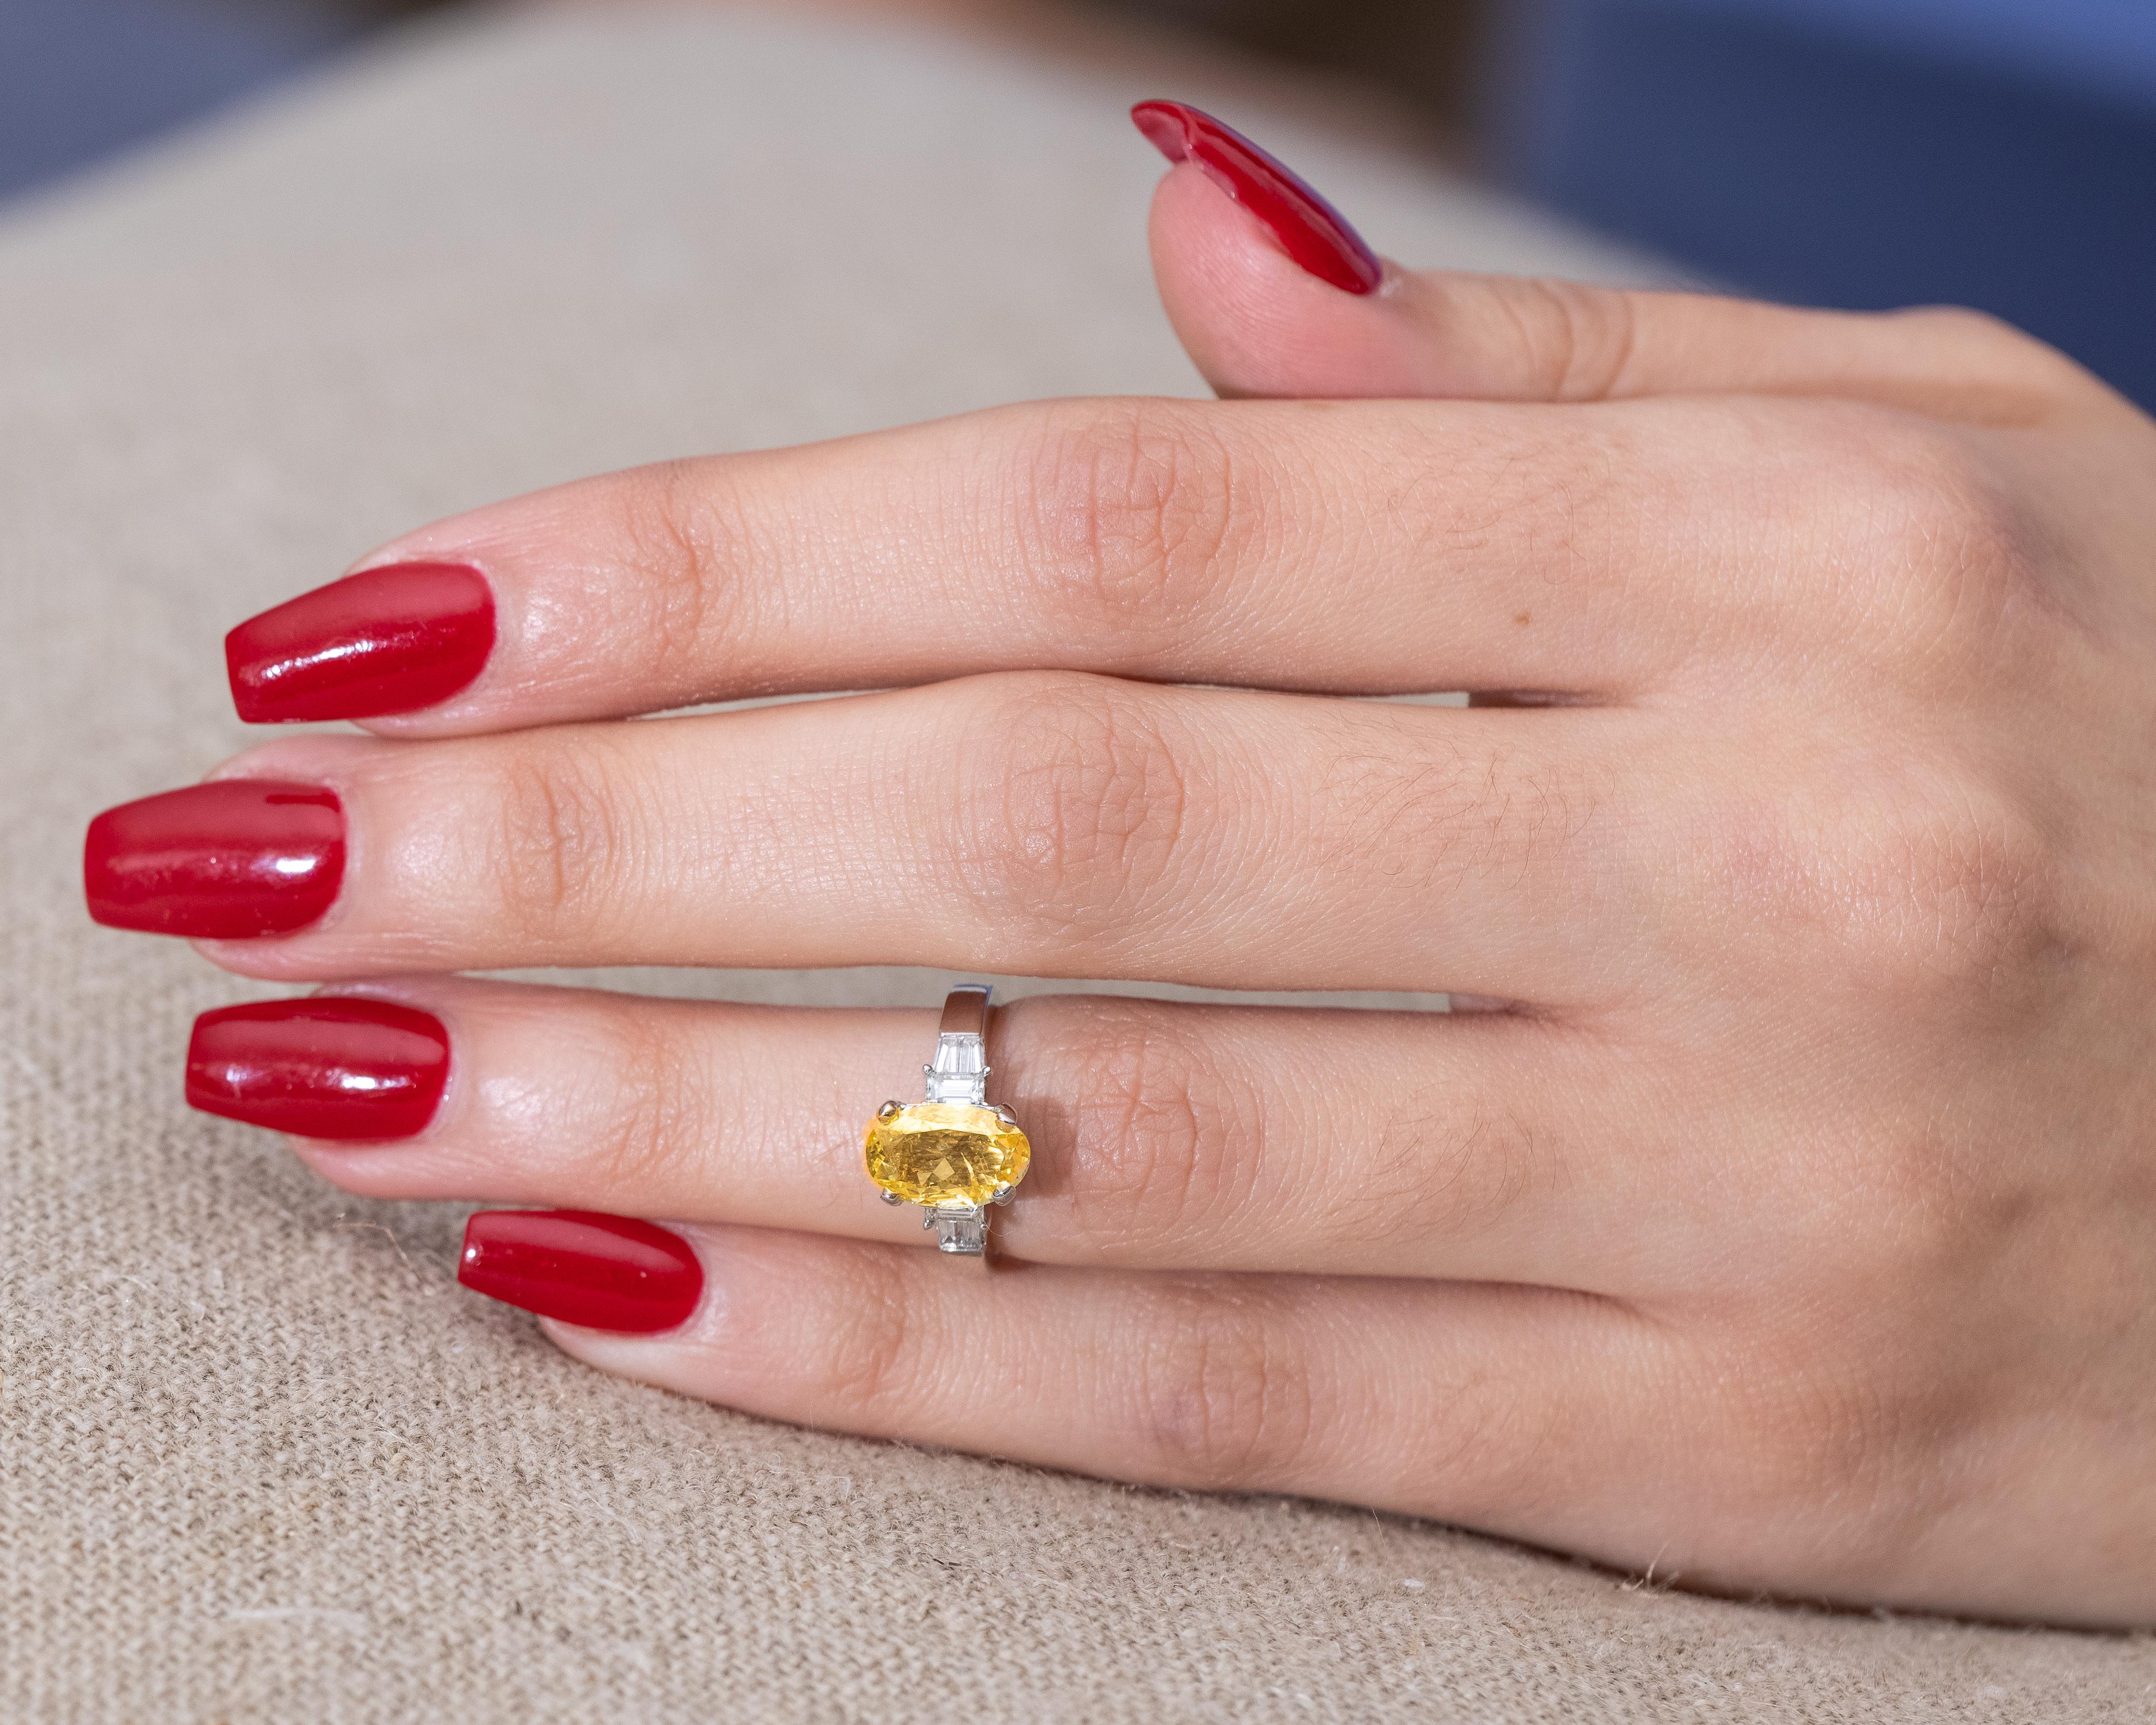 Oval Cut 1.34 Carat Canary Yellow Diamond Engagement Ring, Platinum